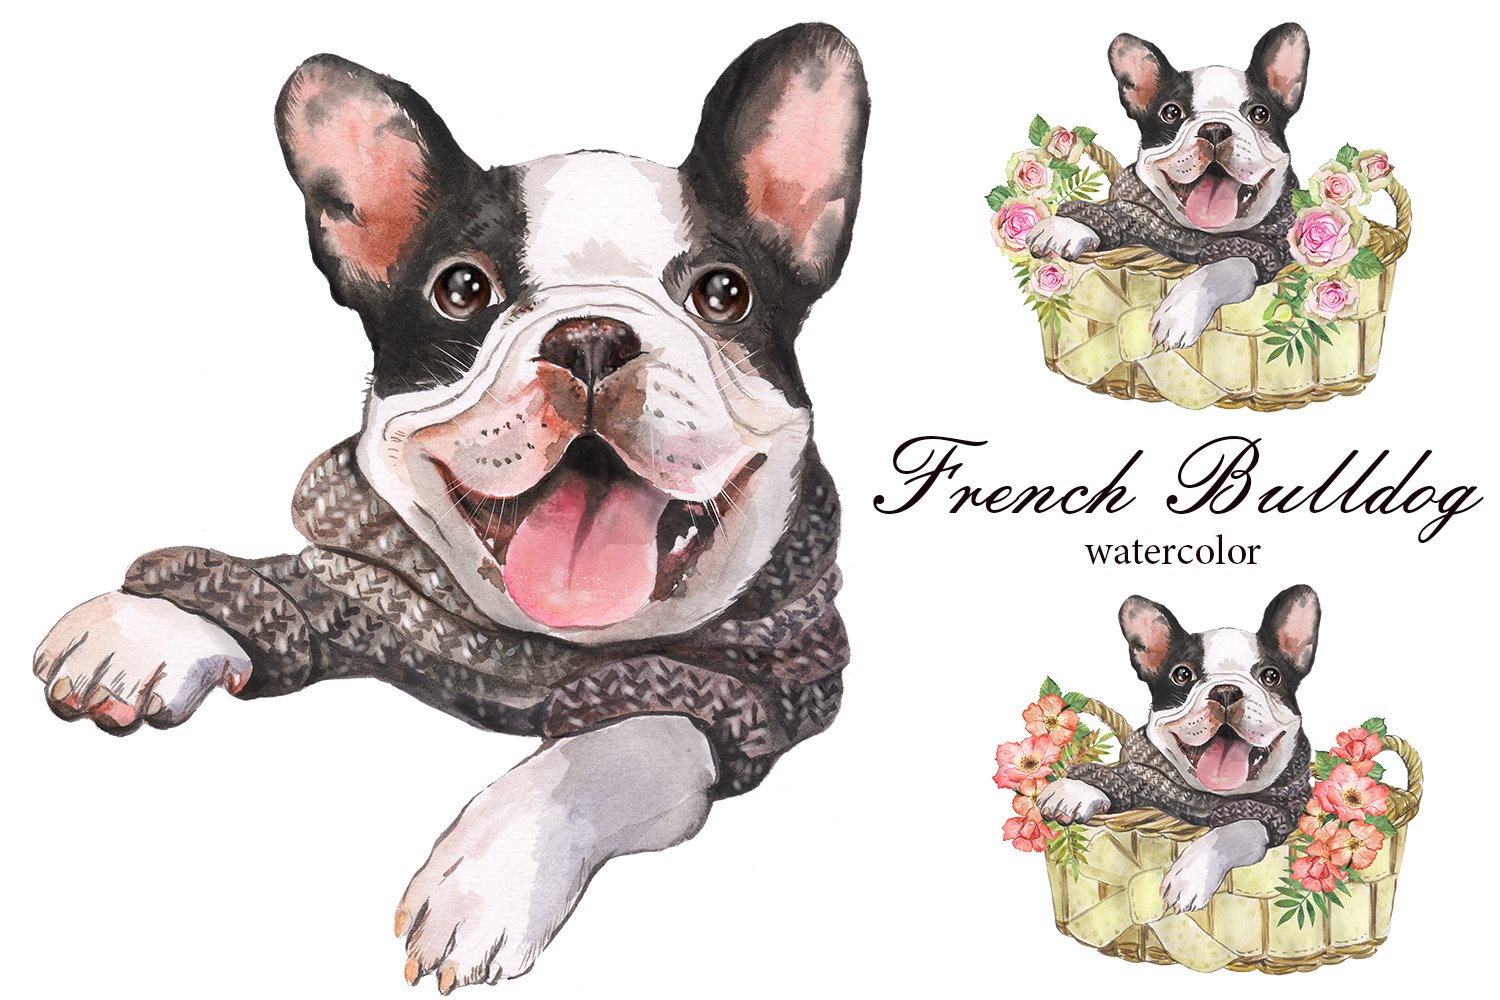 Watercolor drawing of a french bulldog.